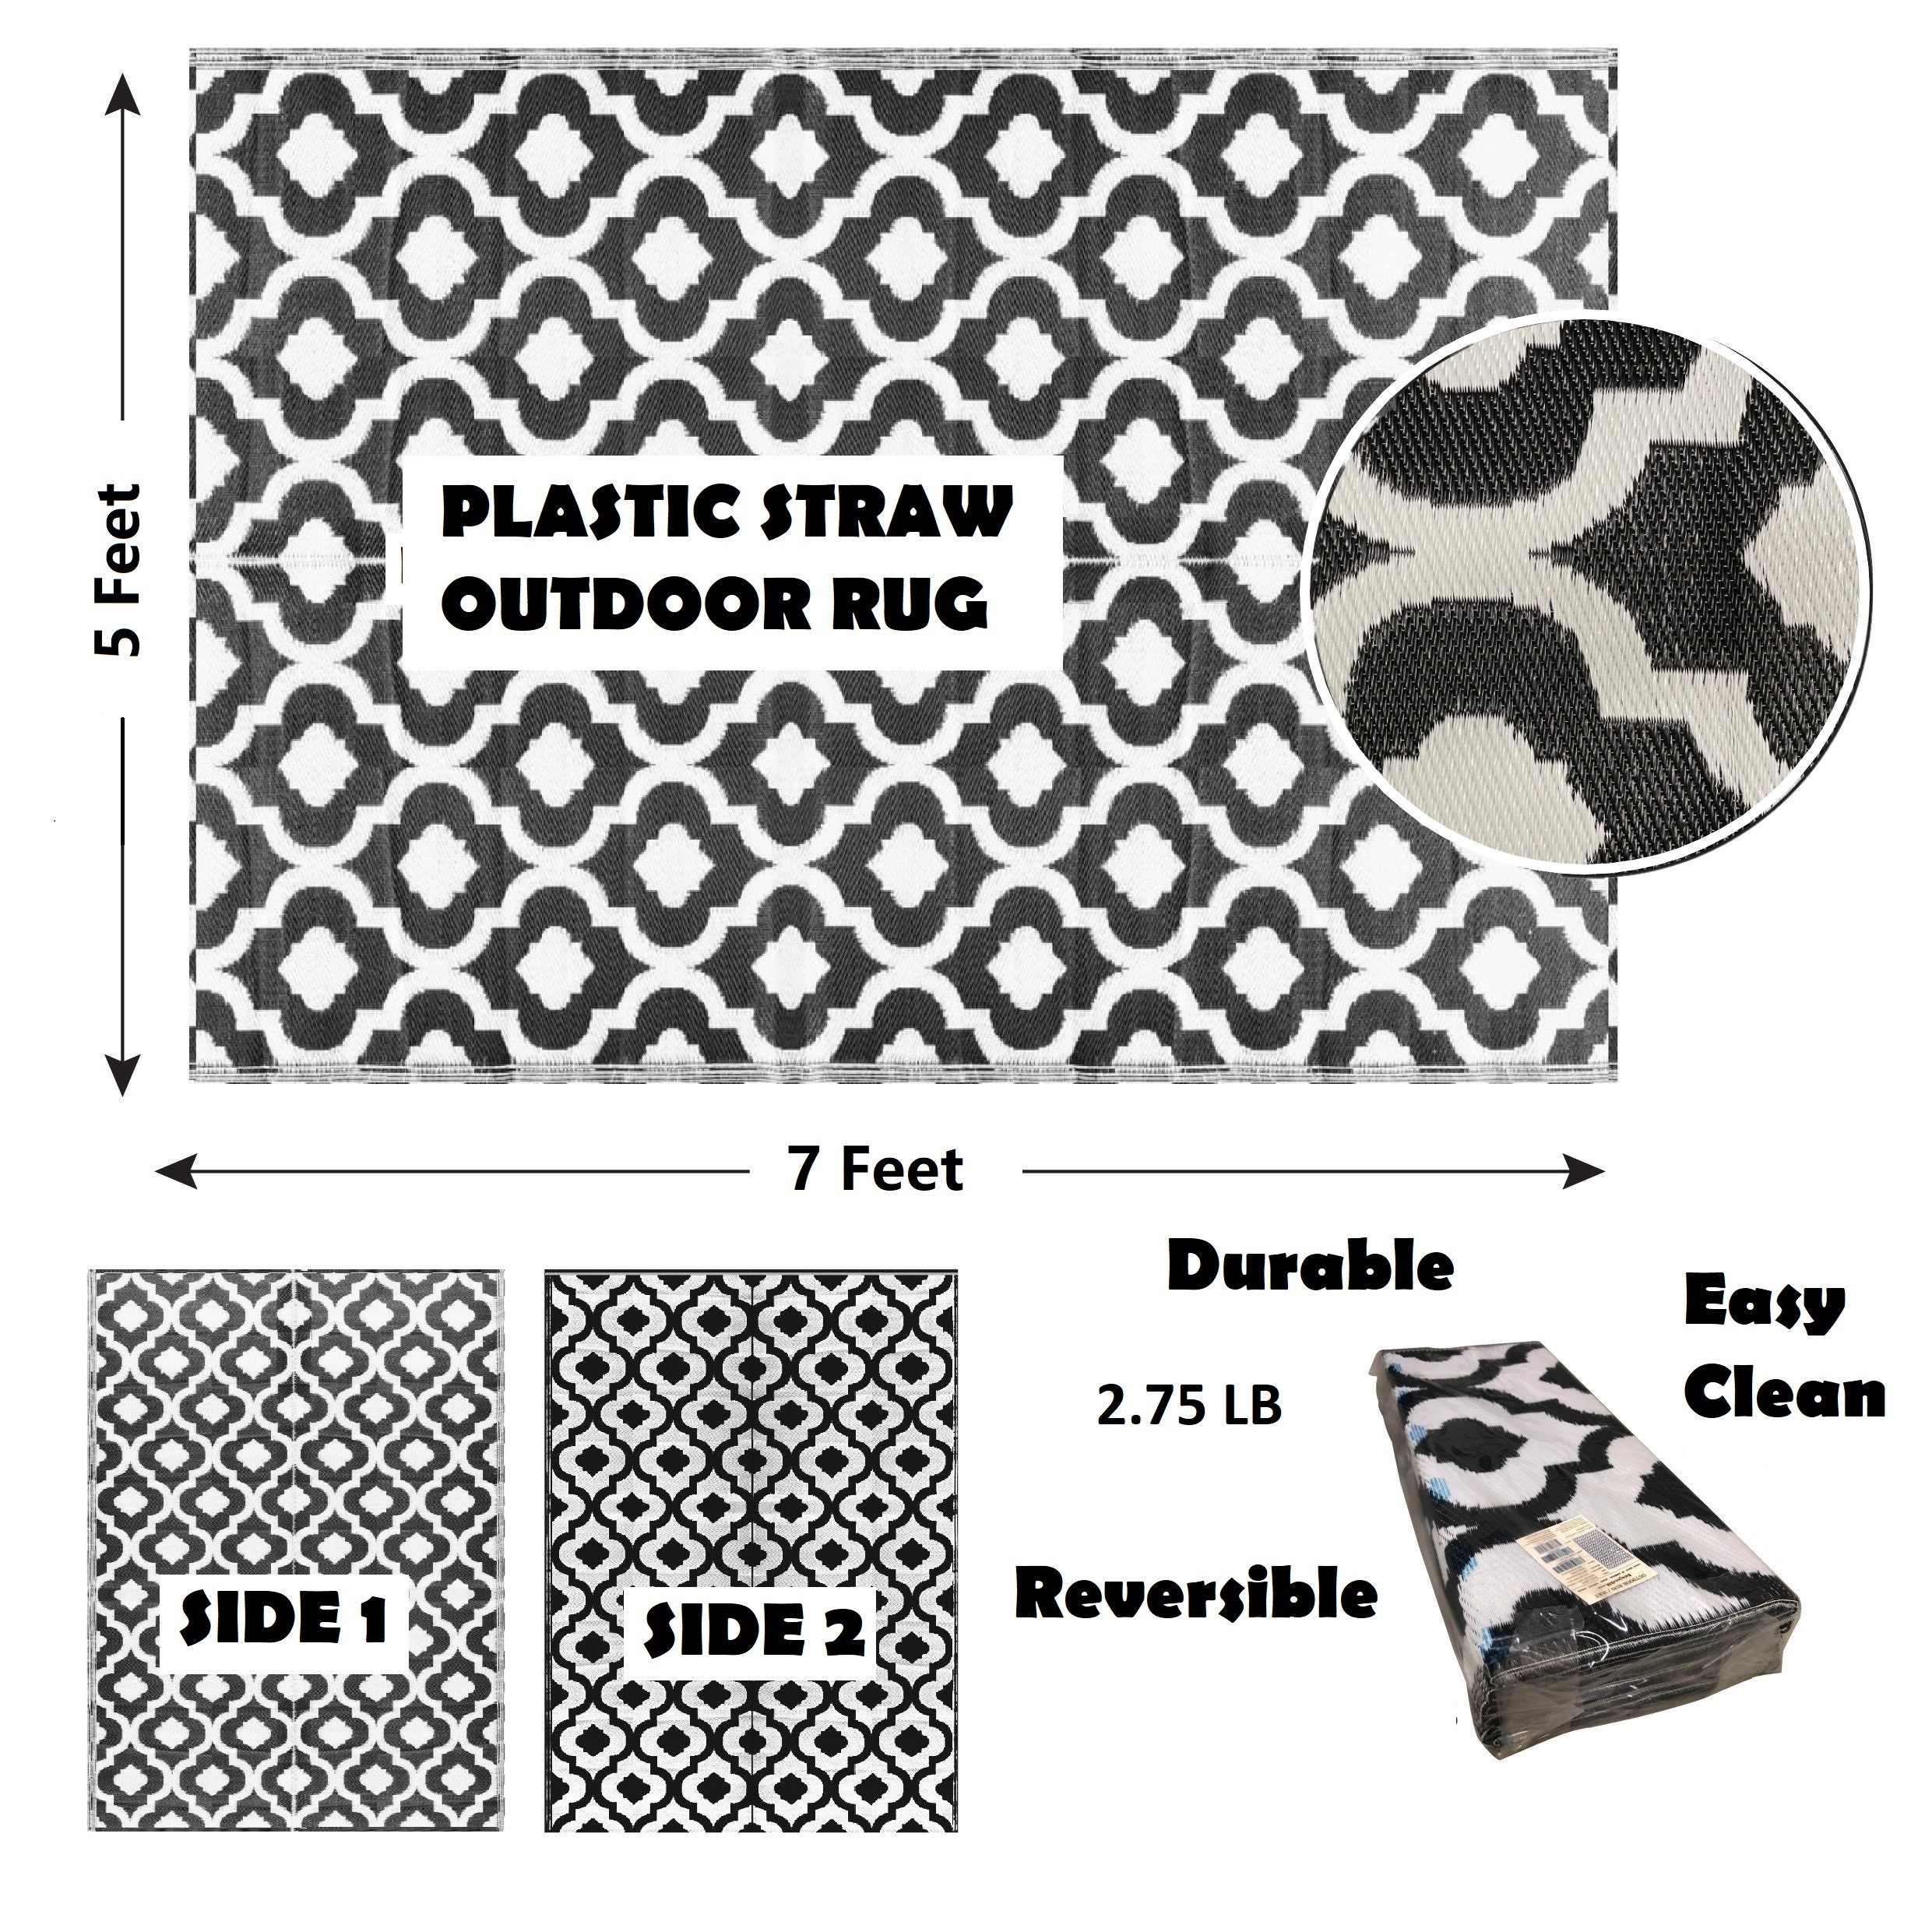 Blytieor 5x7 ft Waterproof Outdoor Rugs, Portable Lightable Plastic Straw  RV Rug Floor Mat Area Rugs for Patio,Backyard, Camping